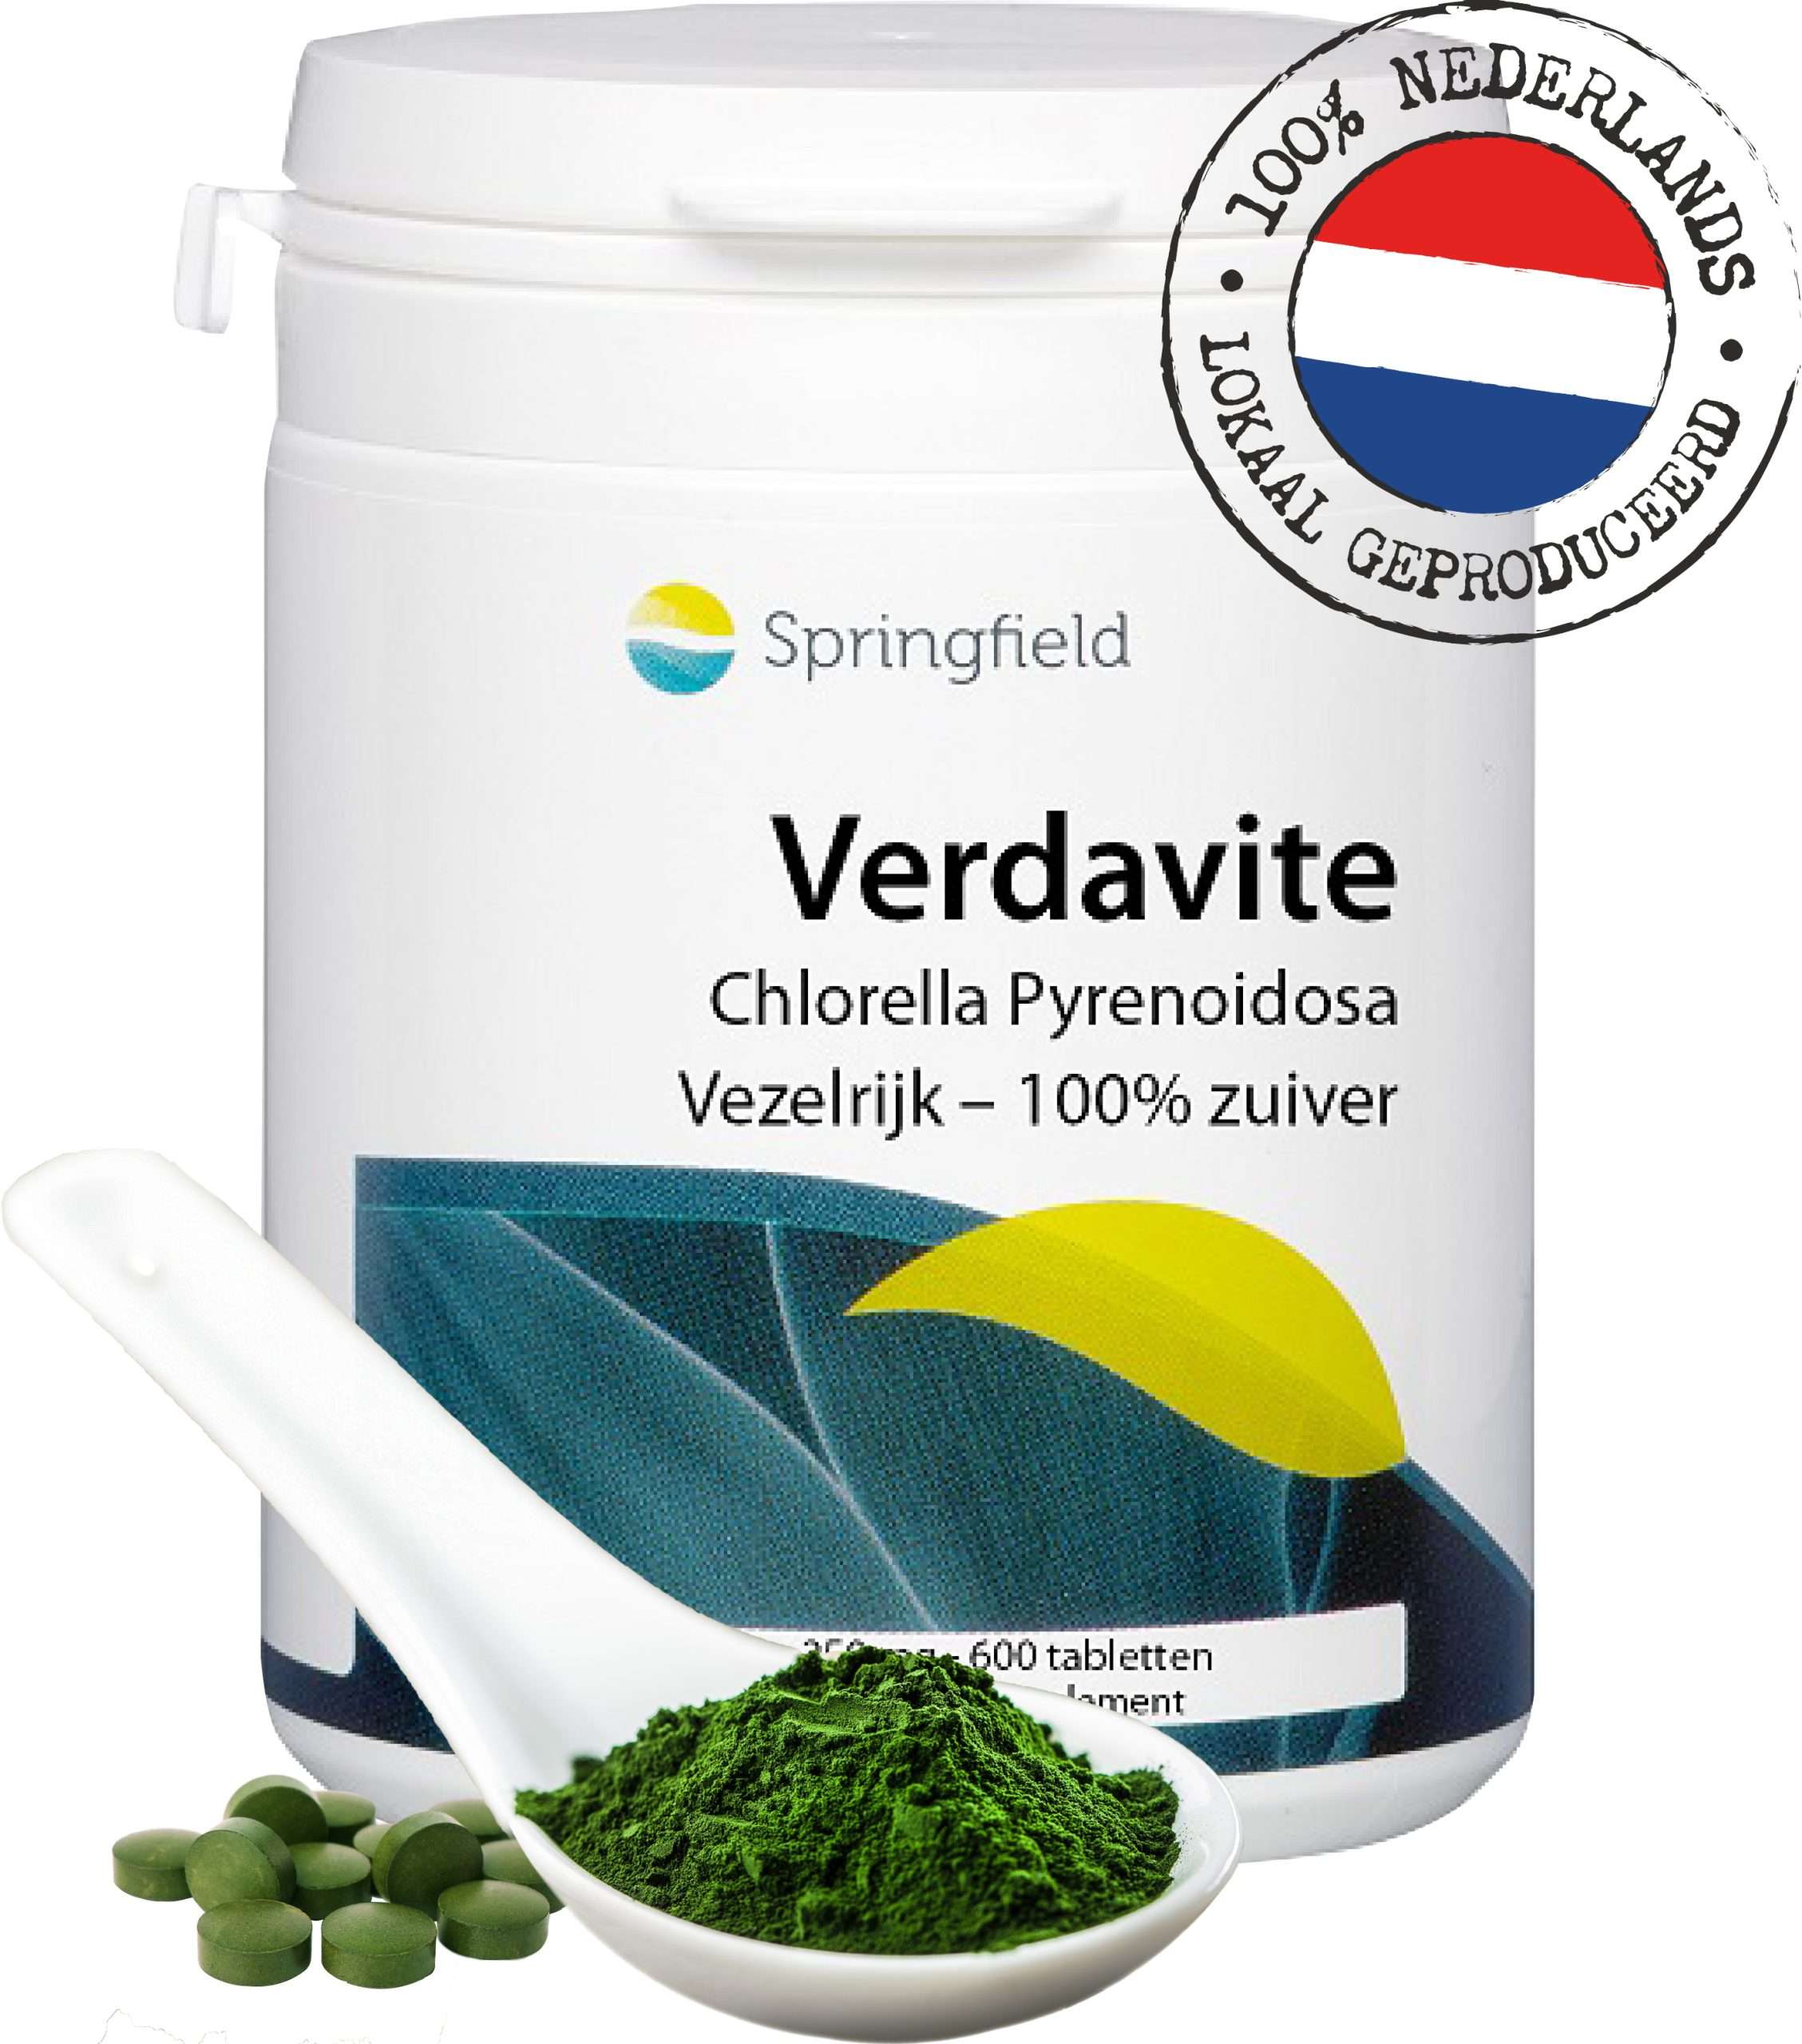 Verdavite chlorella uit Nederland - Vezelrijk en 100% zuiver